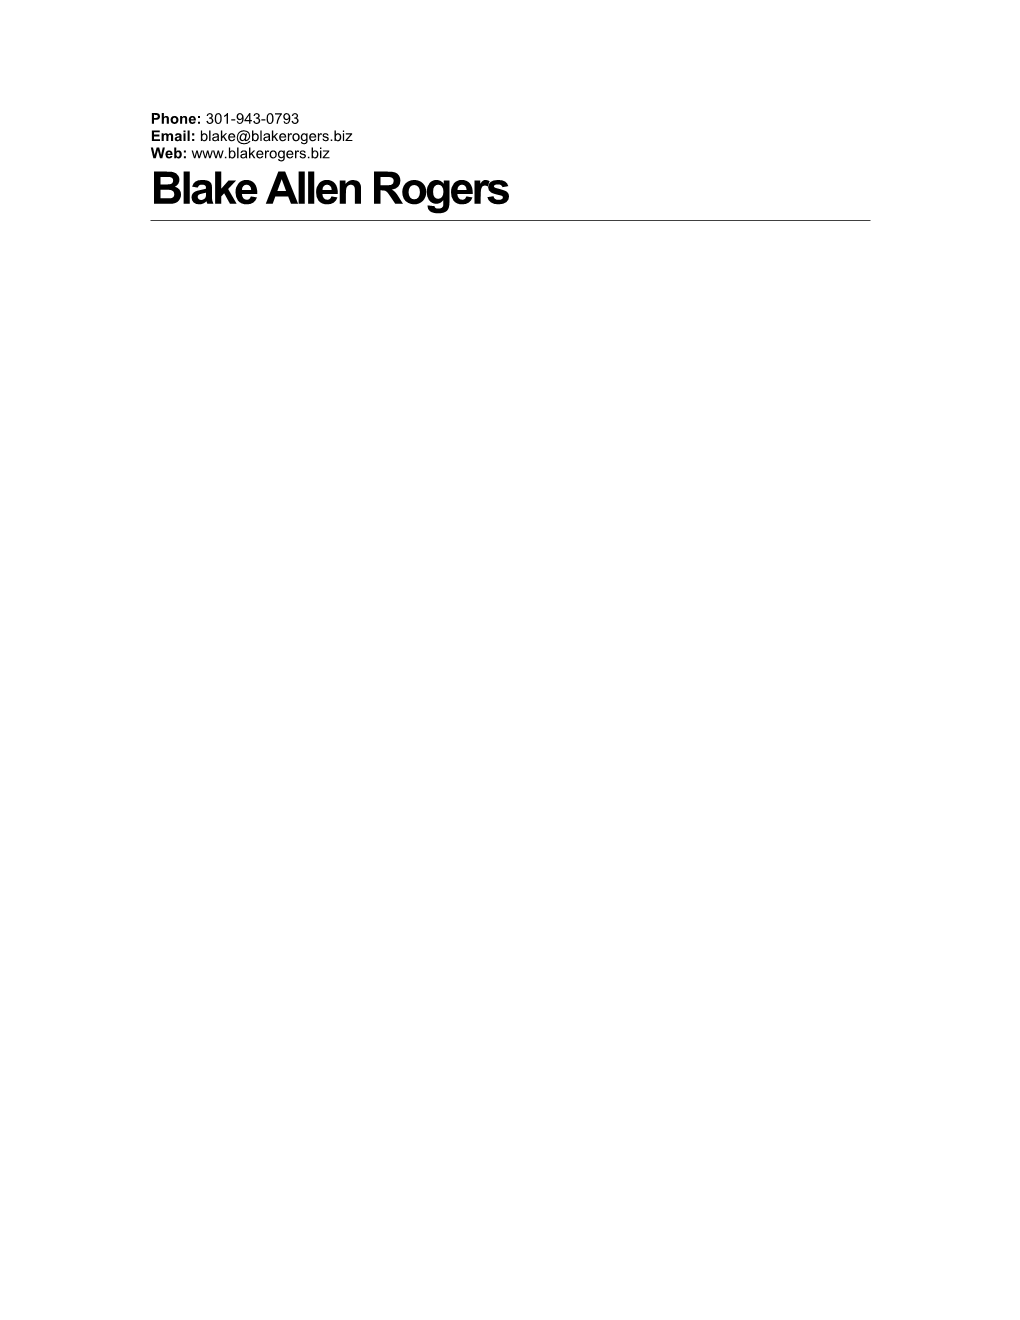 Blake Allen Rogers